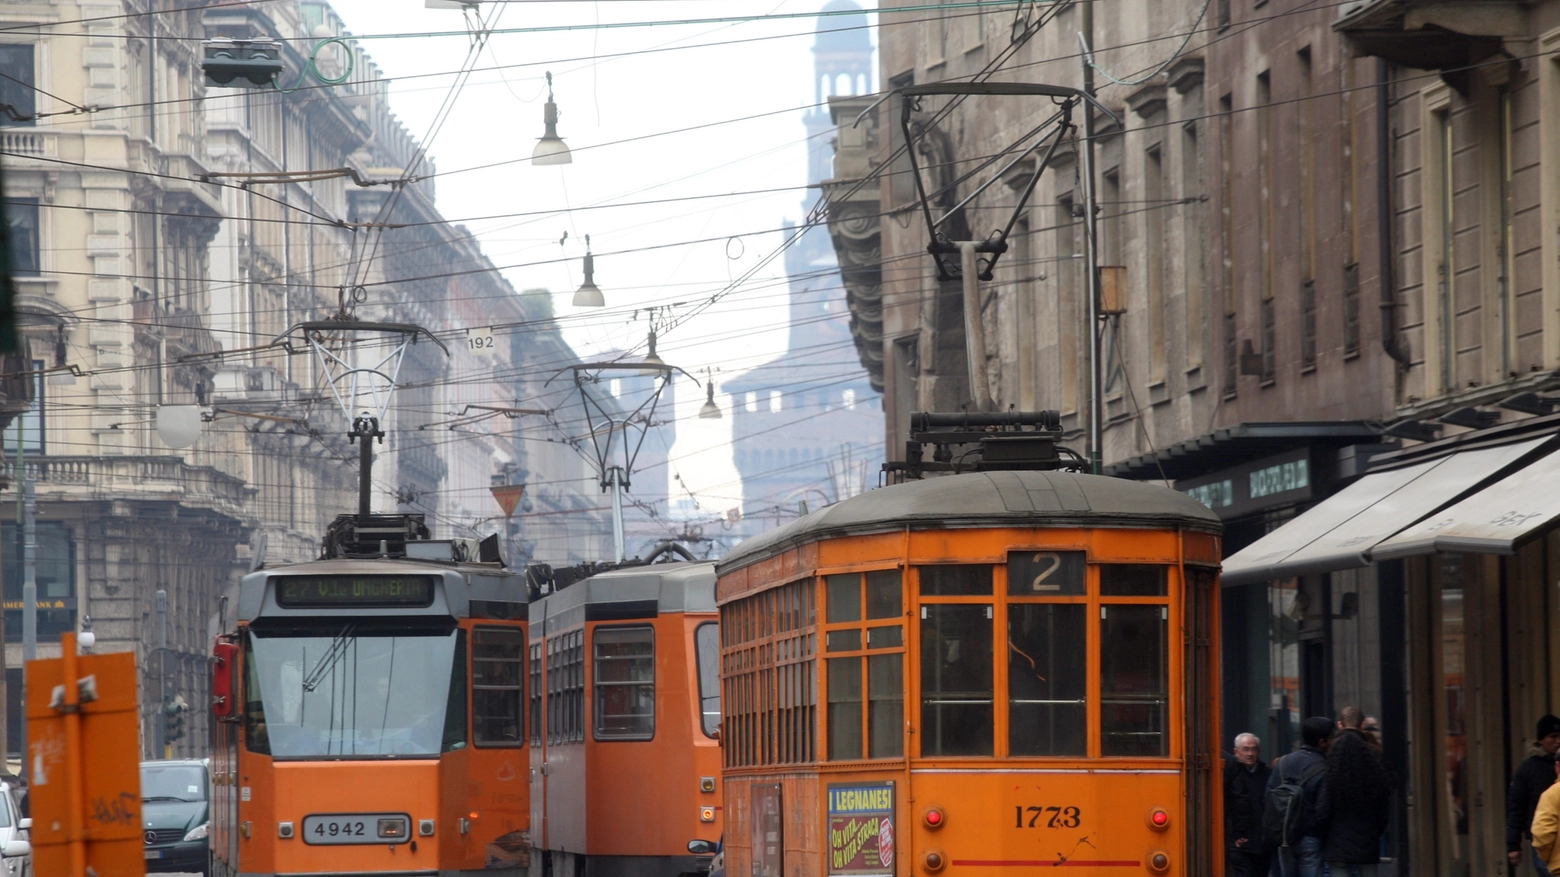 Tram a Milano (Newpress)